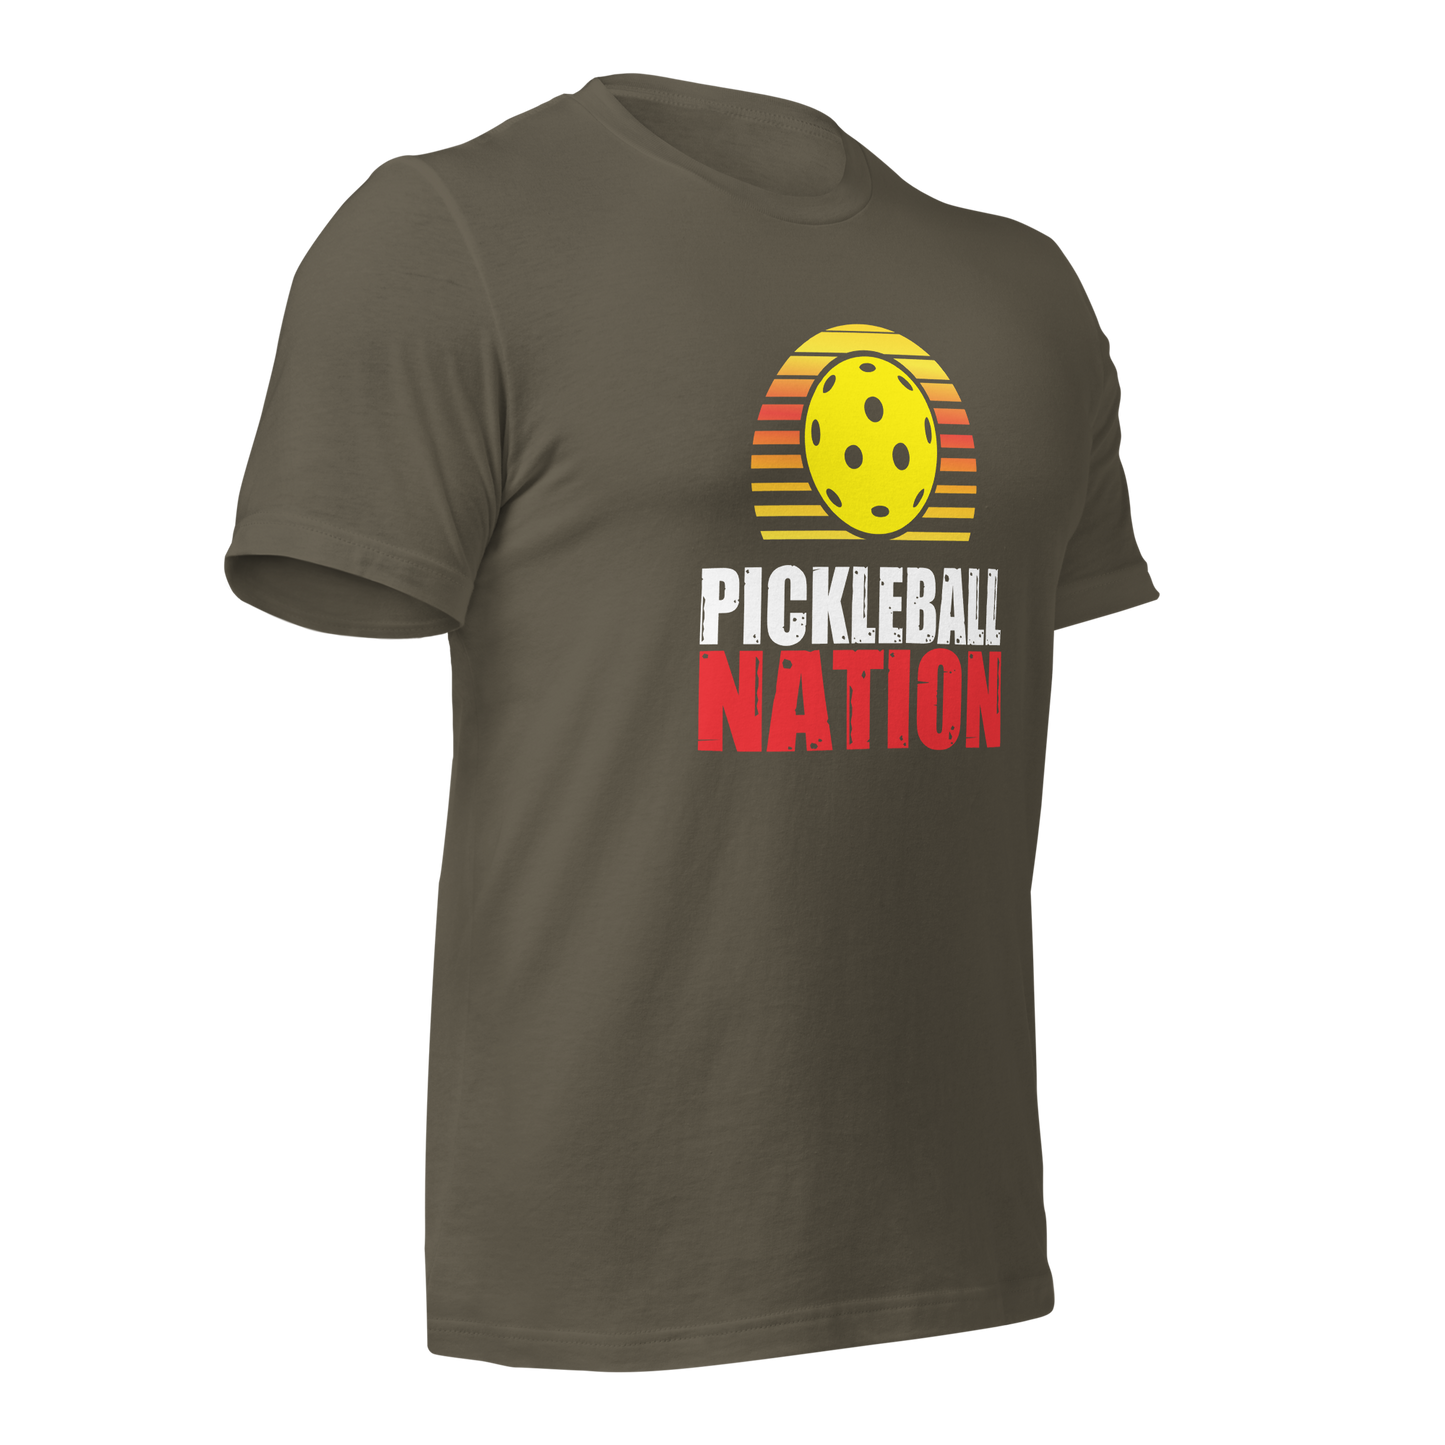 Pickleball Nation Horizon Tee